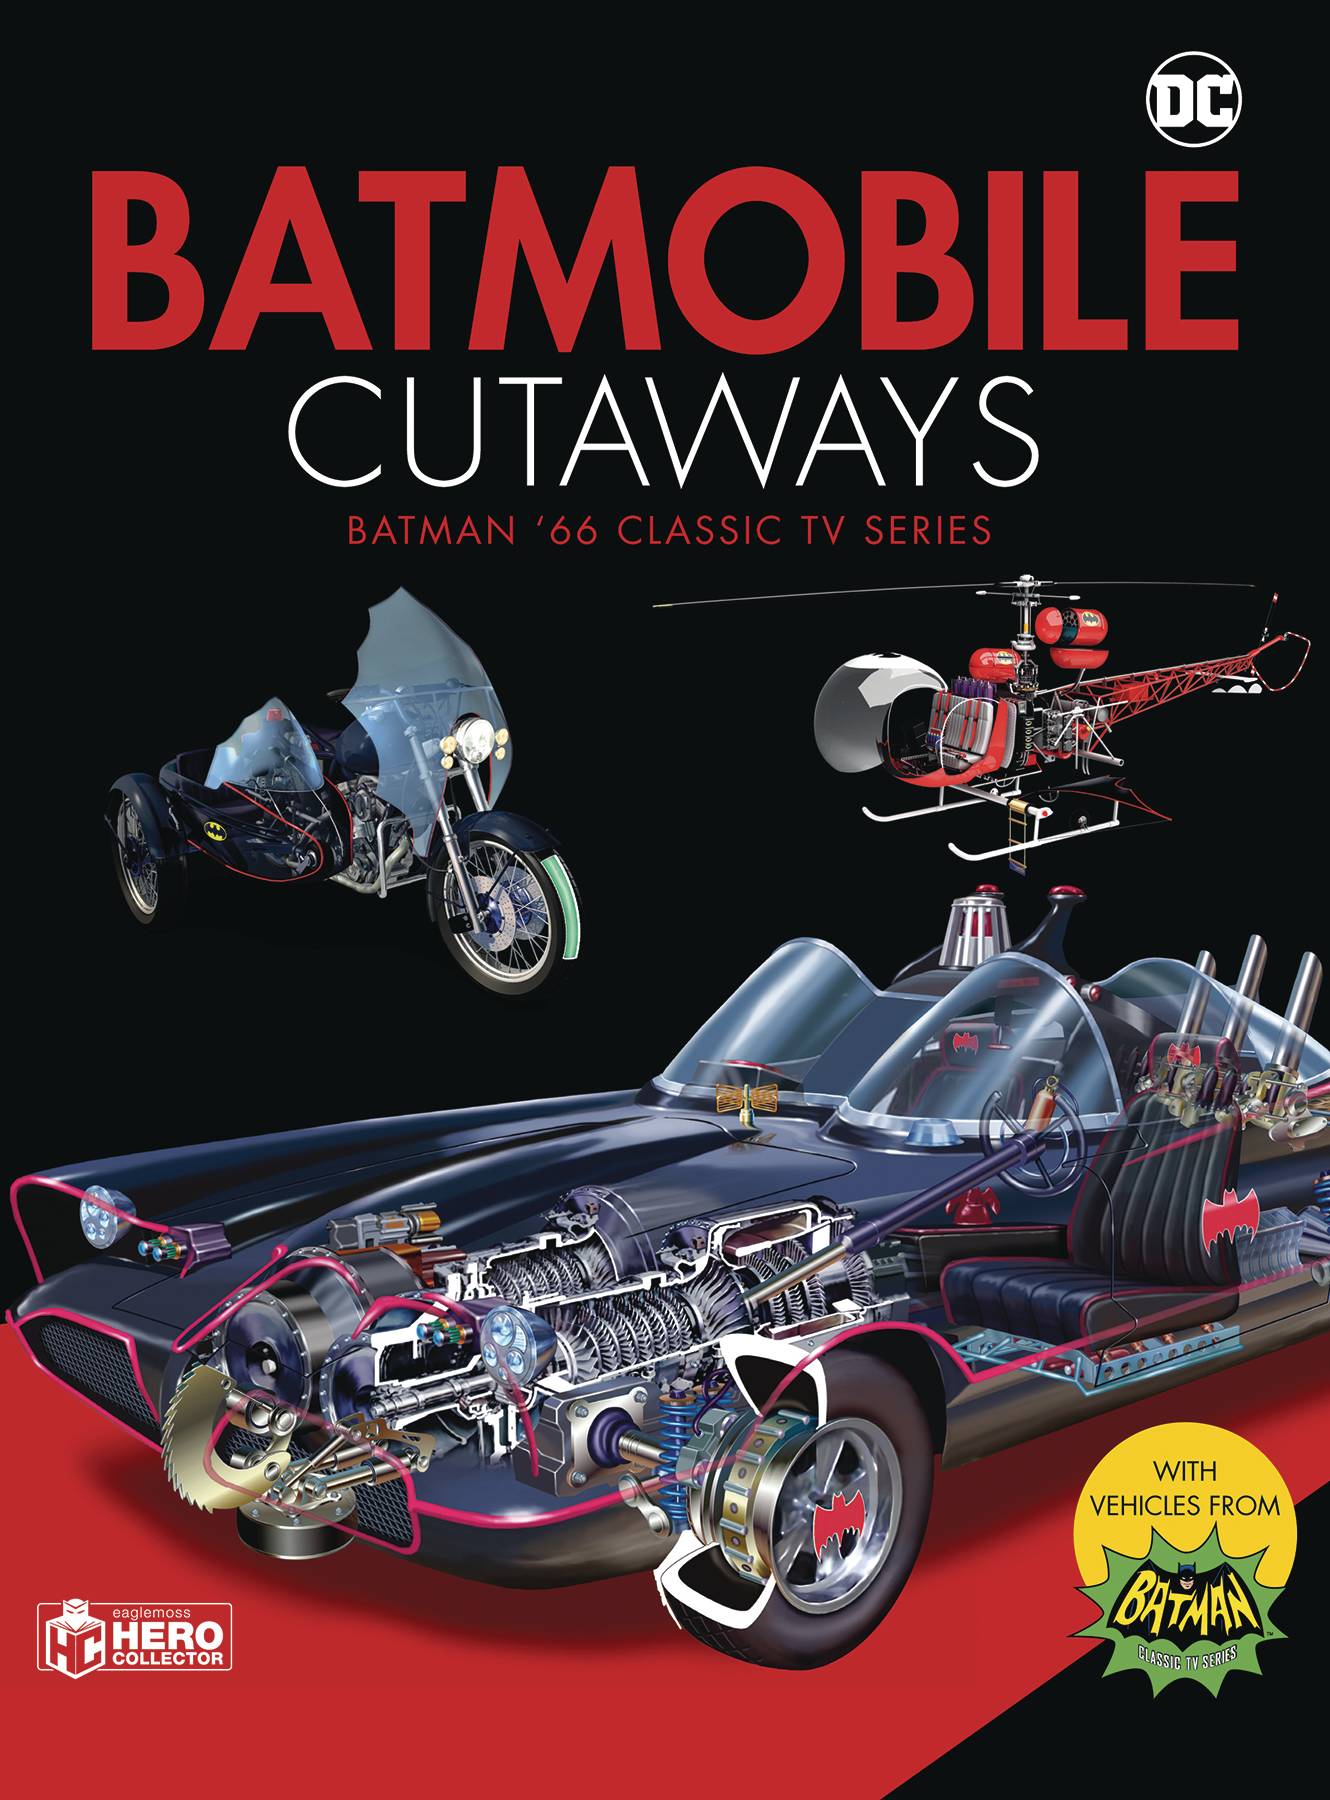 Batmobile Cutaways #1 Classic Batman 66 TV Series With Collectible